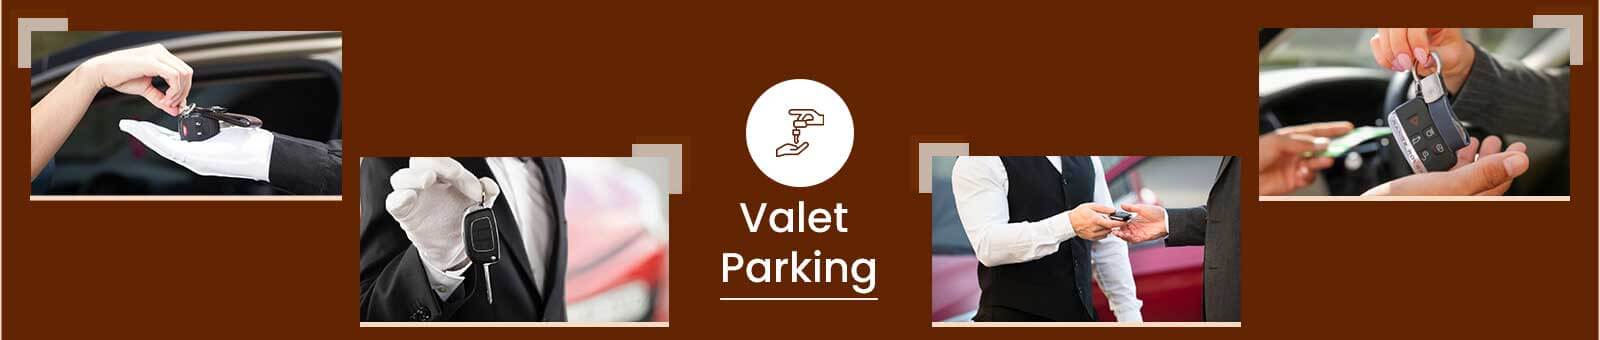 Valet Parking Service Providers in Delhi